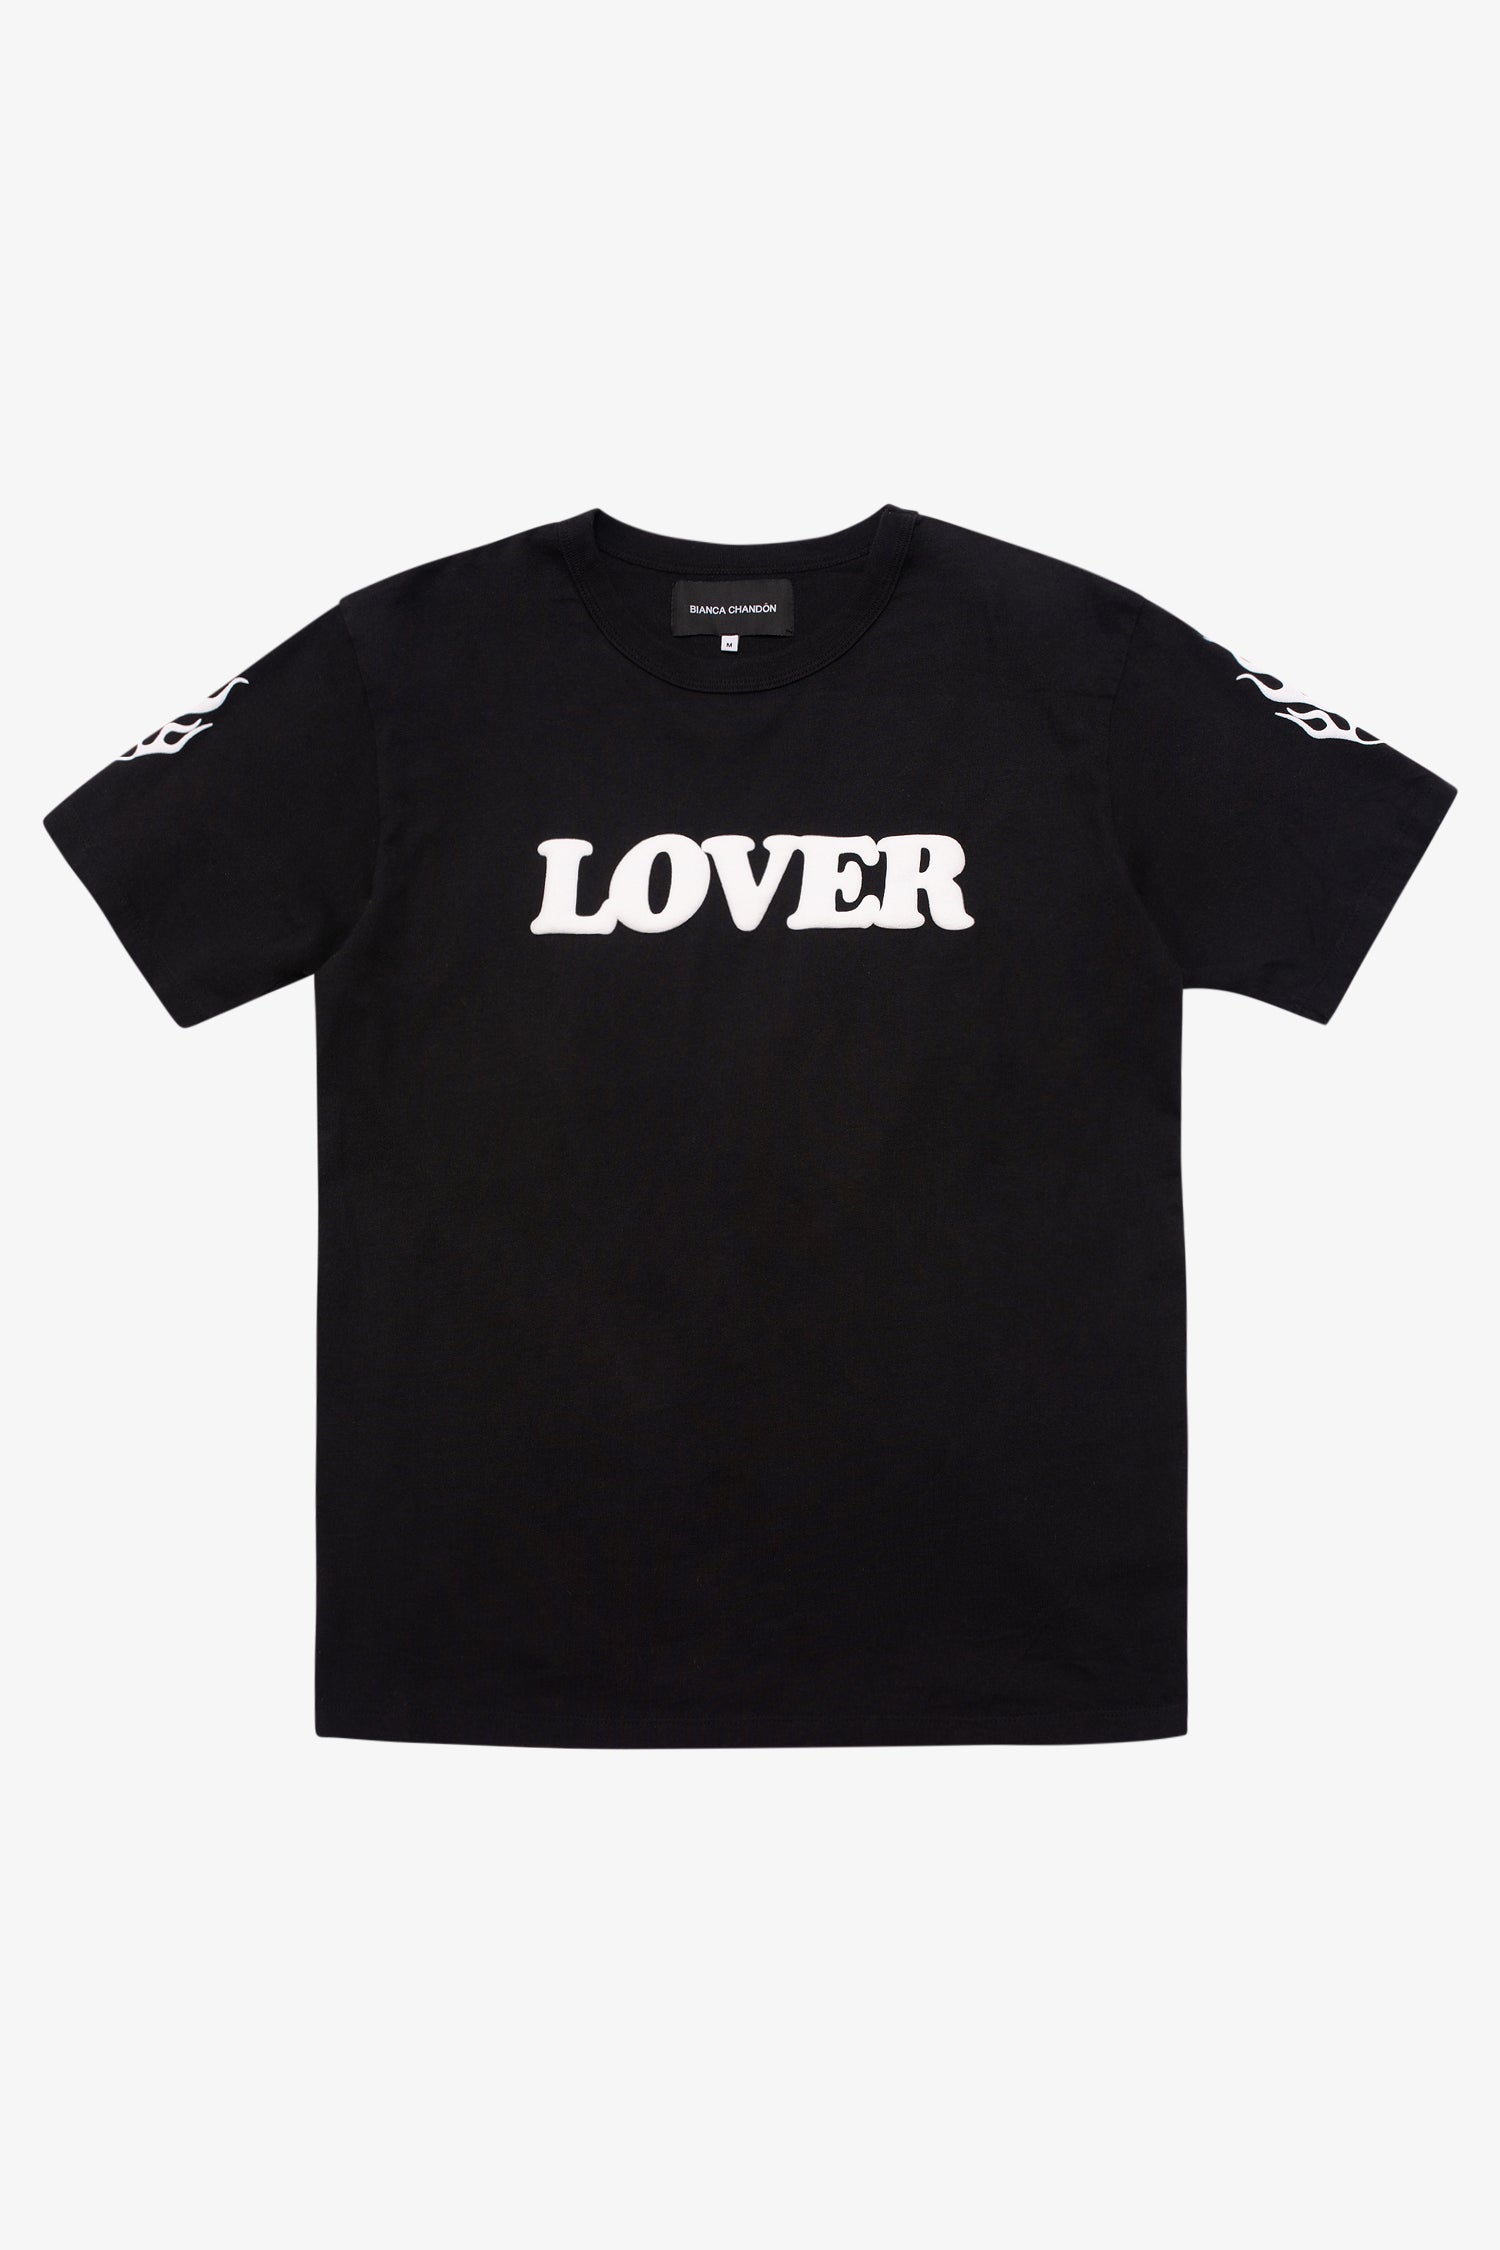 BIANCA CHANDON Lover T-Shirt | Selectshop FRAME